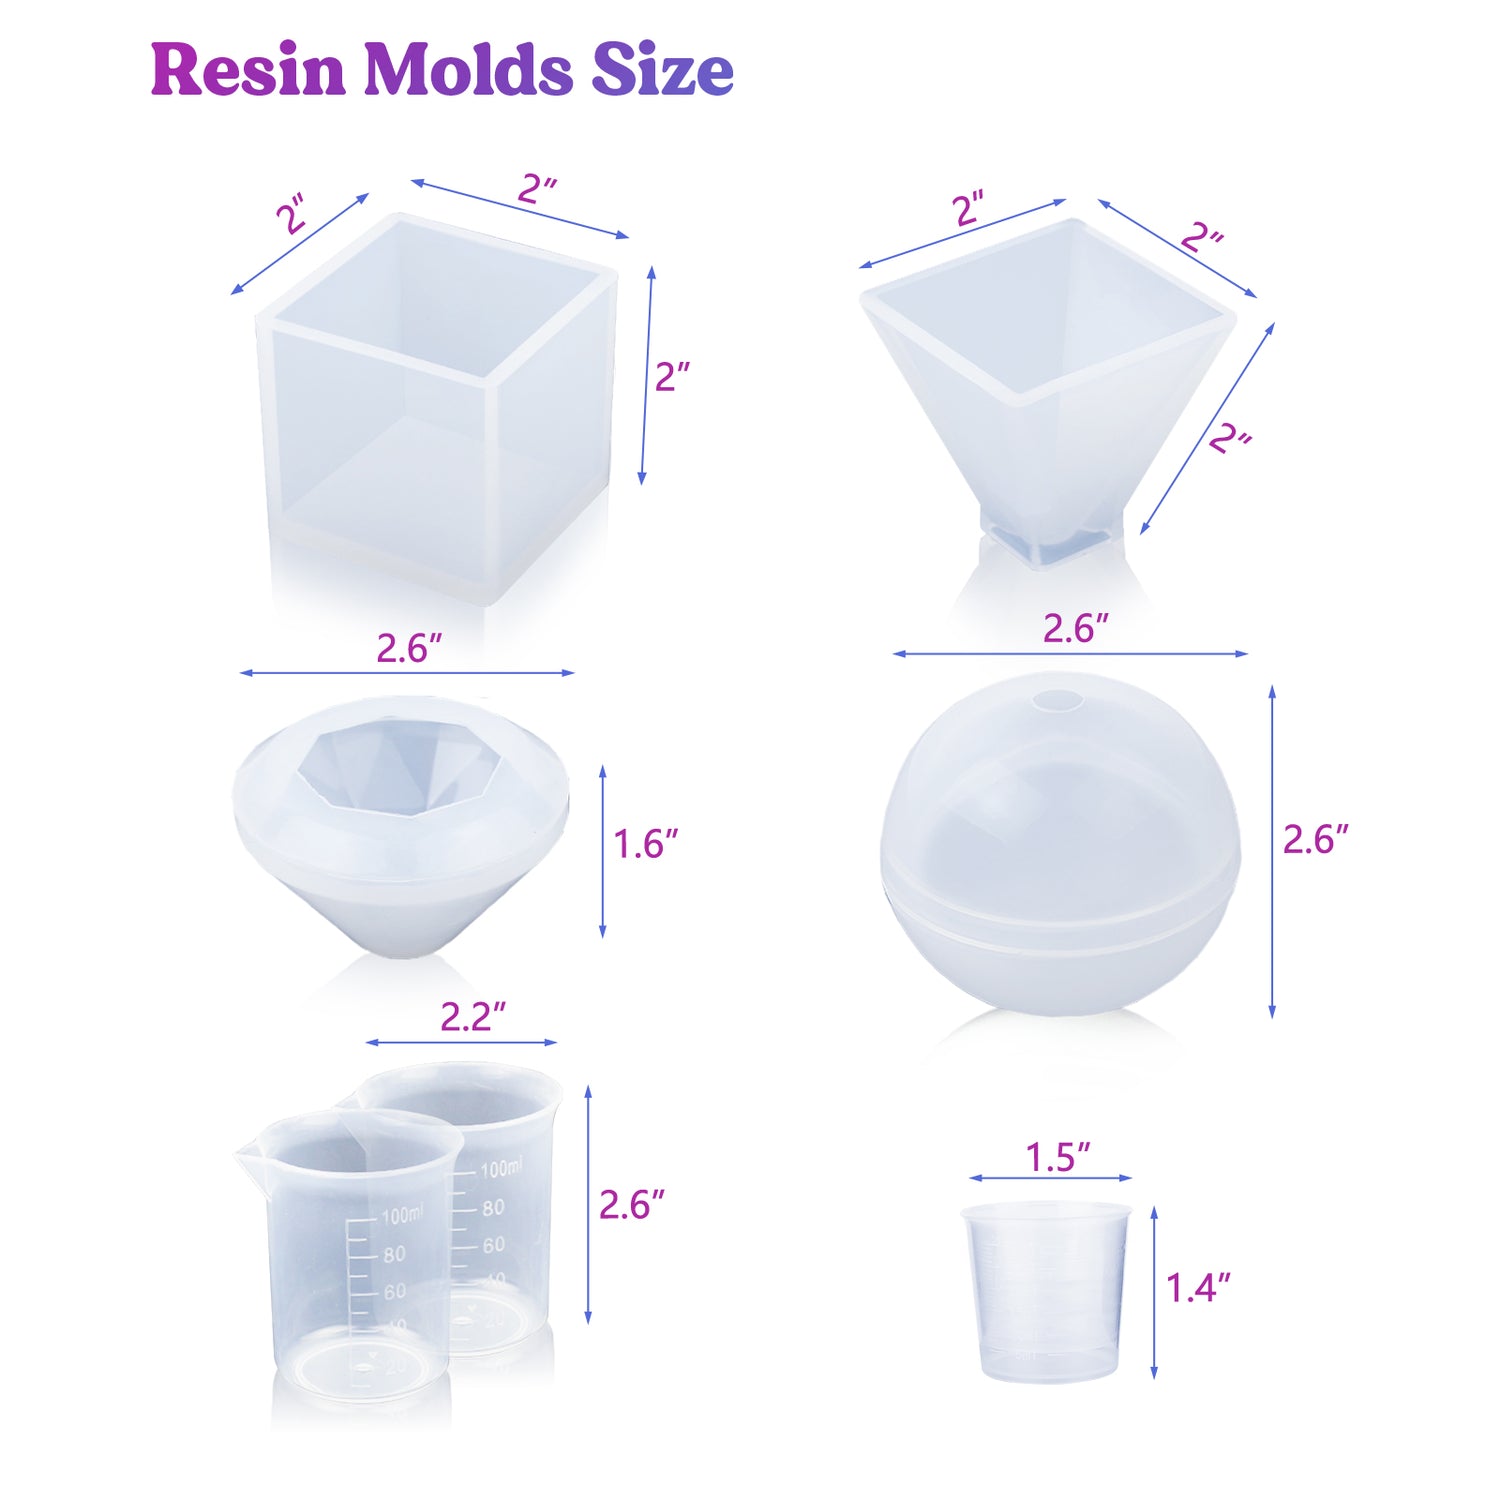 Resin Kit for Beginners, Decoration Set - 50 Pcs